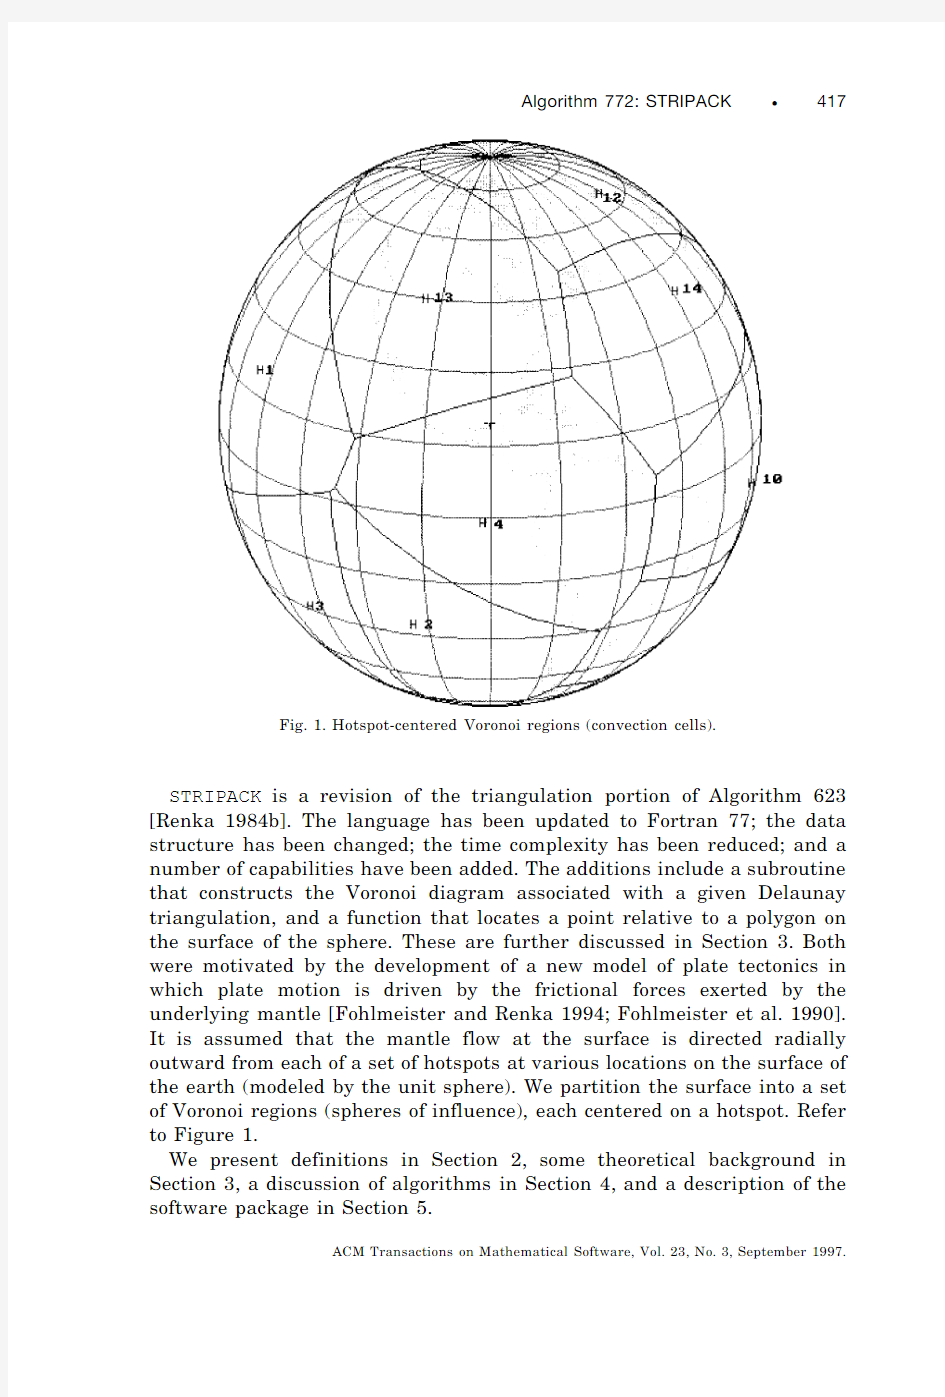 Delaunay Triangulation and Voronoi Diagram on the